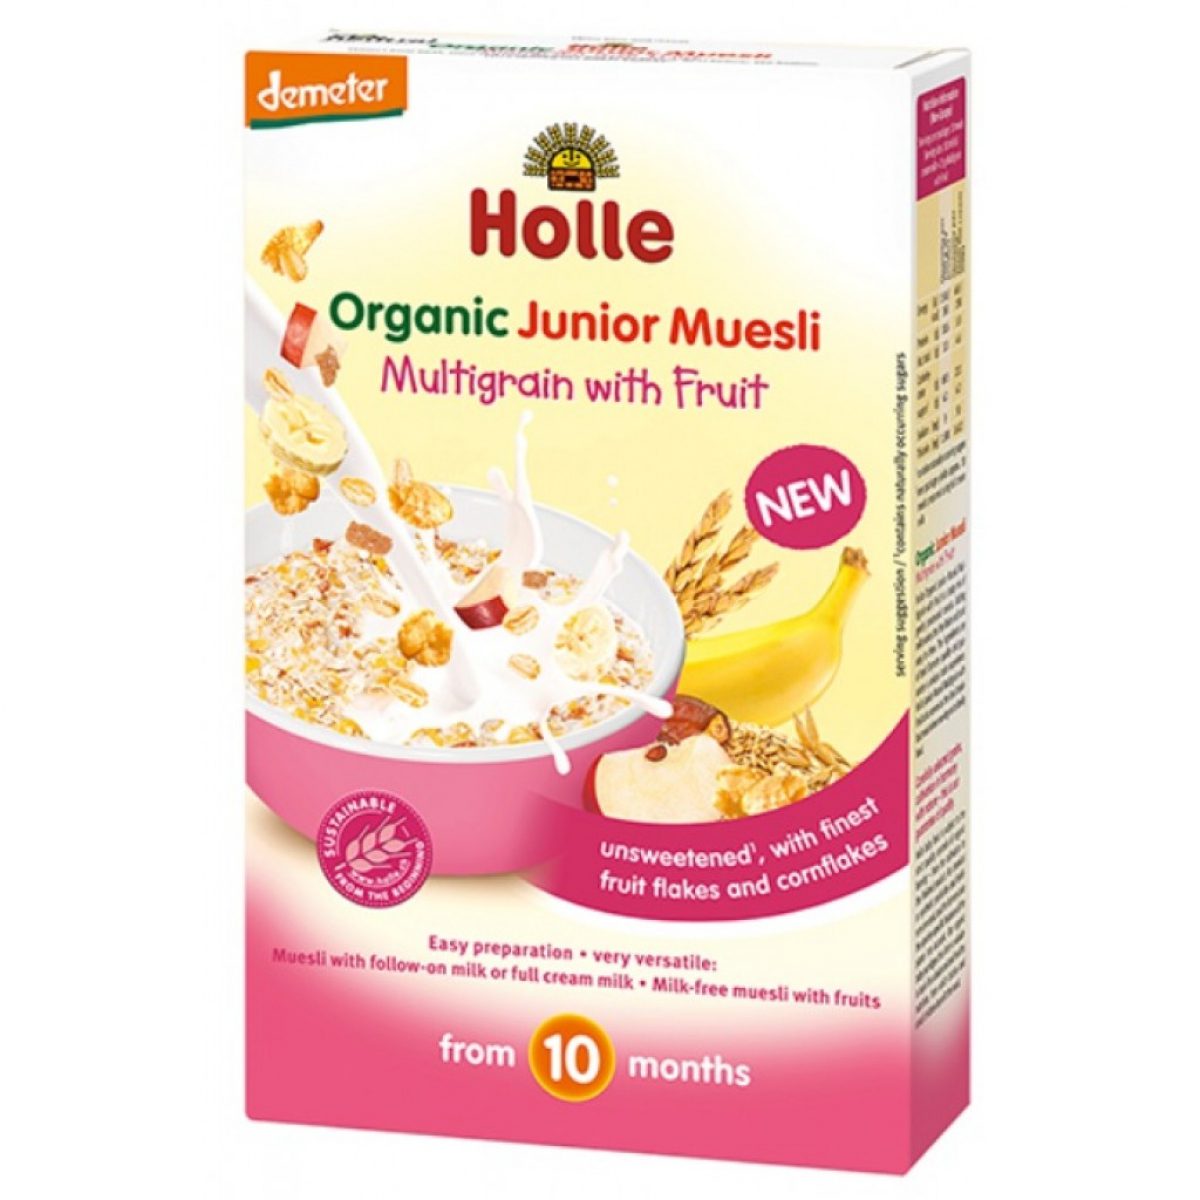 Holle Organic Junior Muesli (Multigrain With Fruit)